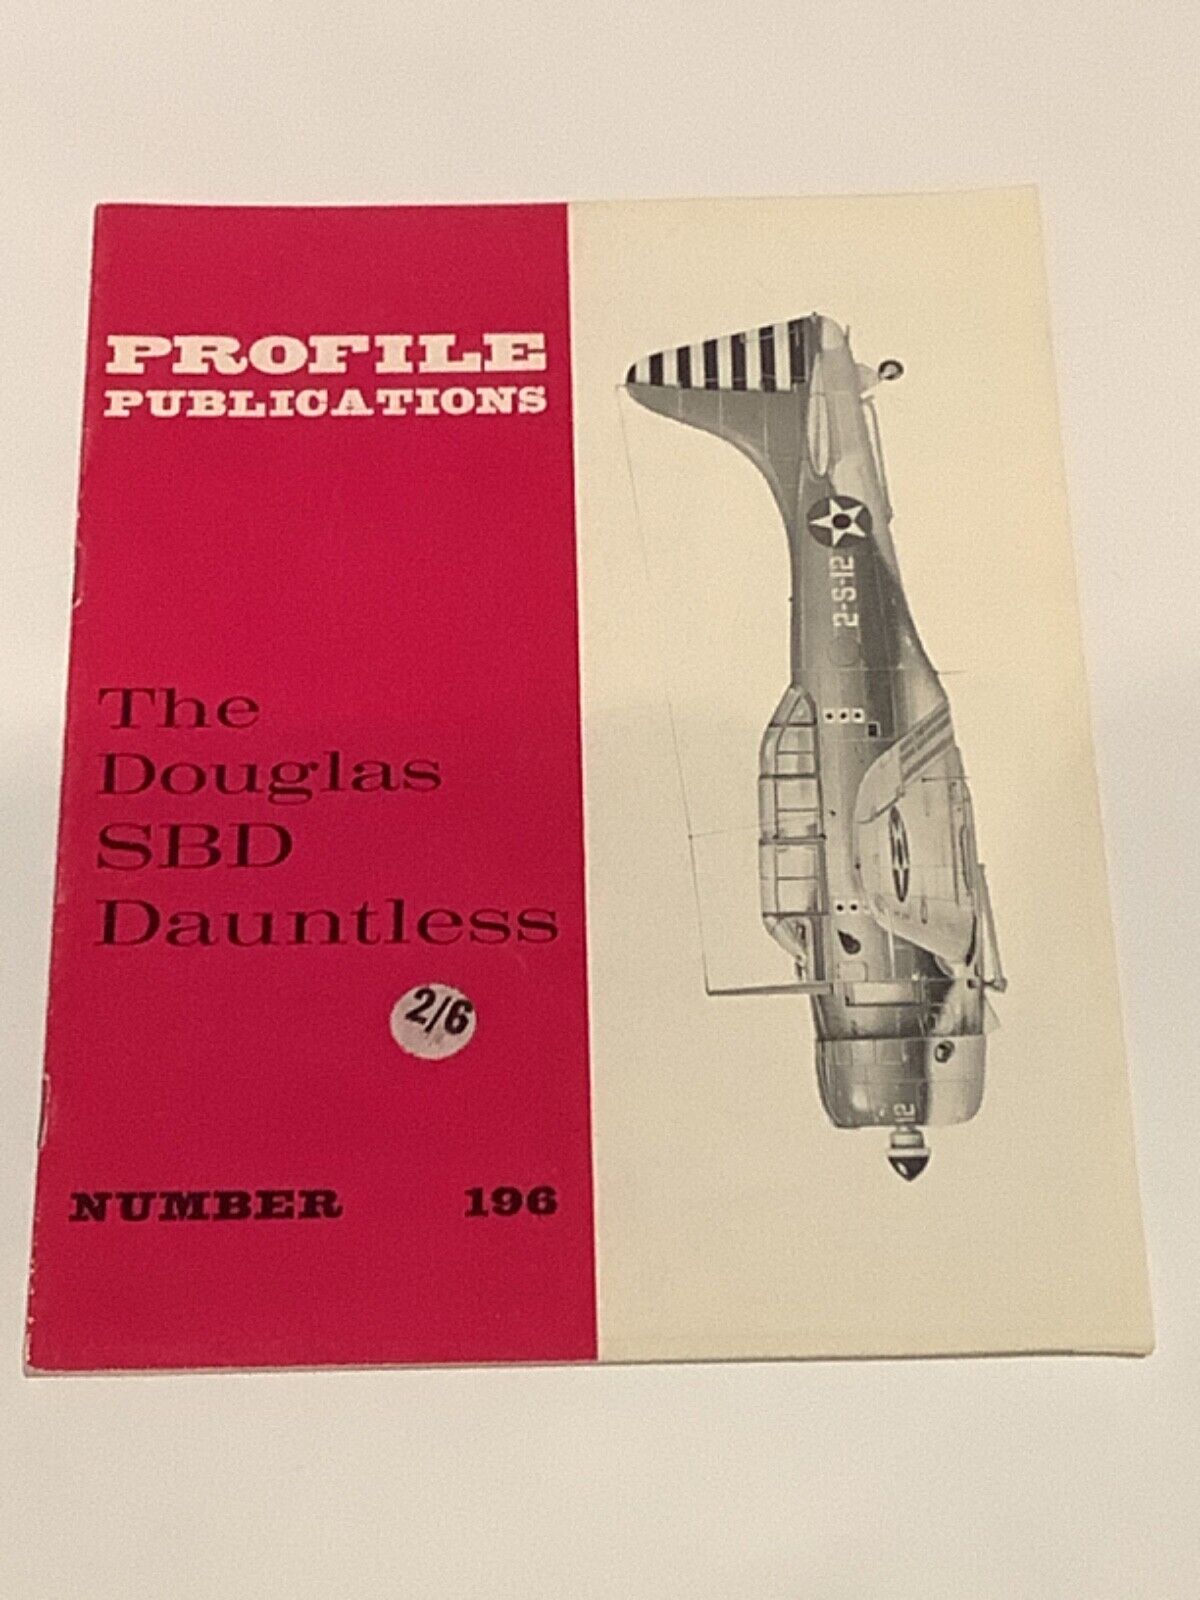 PROFILE PUBLICATIONS 196 Douglas SBD Dauntless - David Brazelton 10pgs 234x174mm